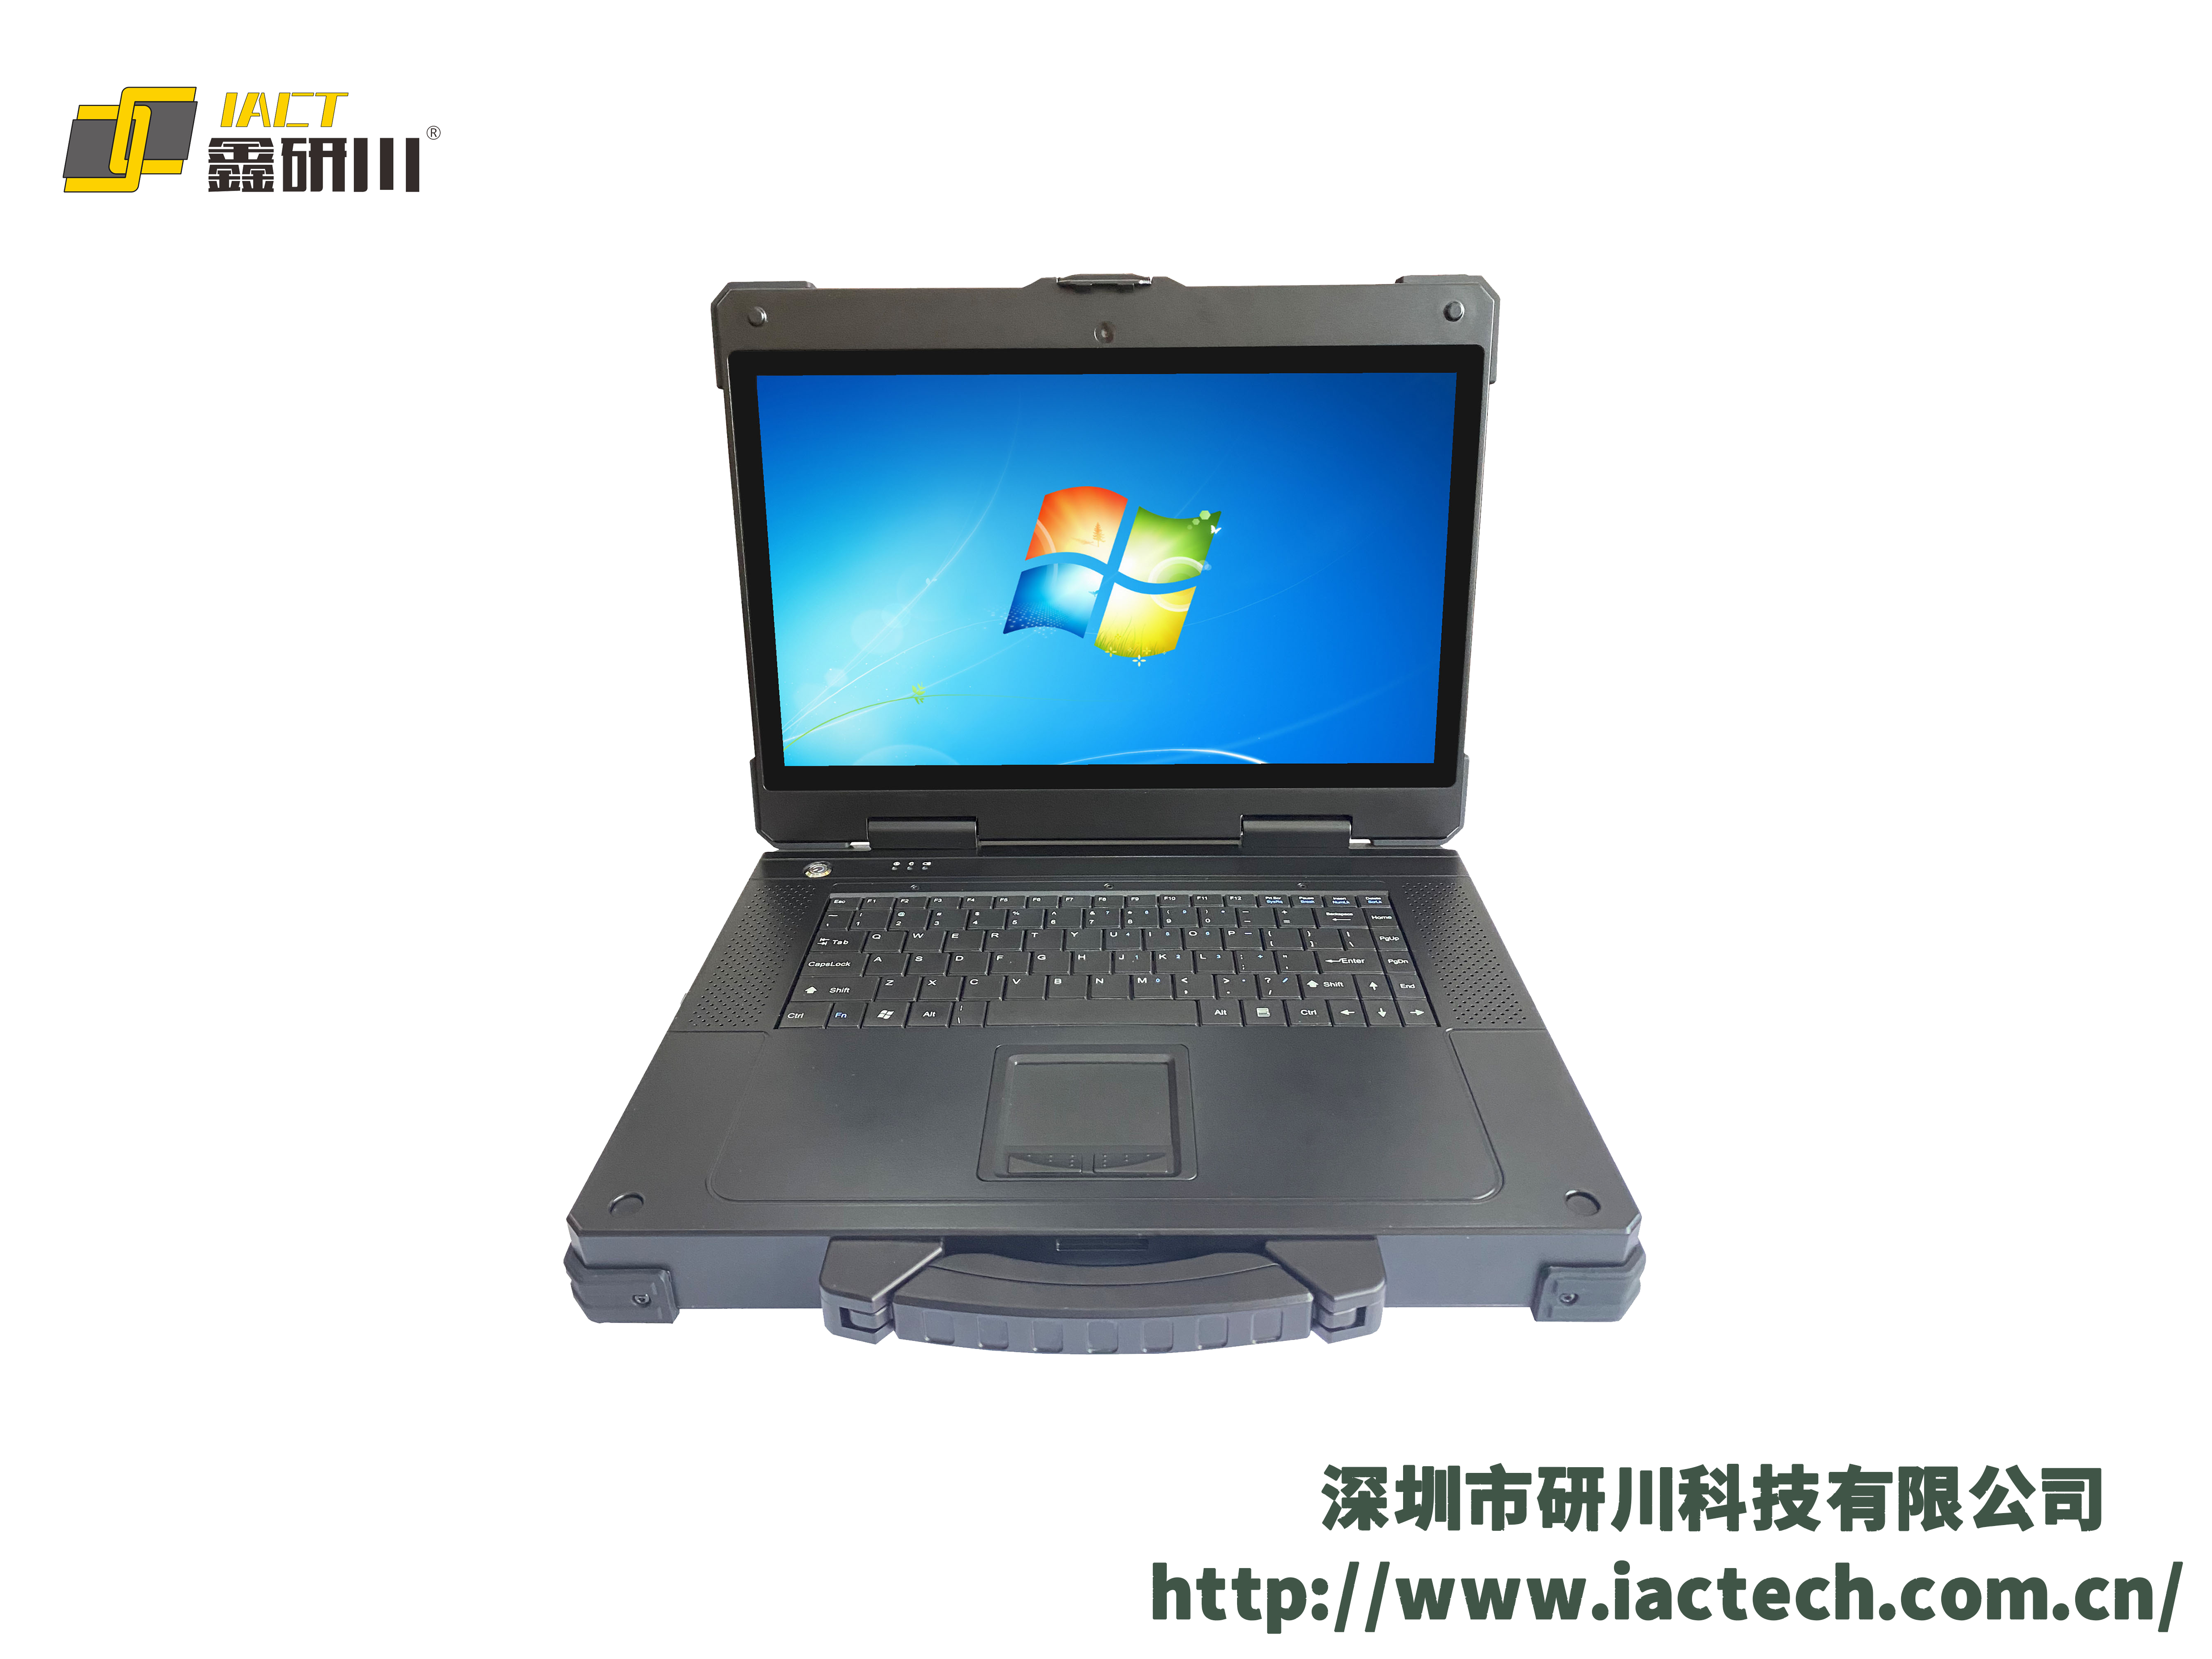 RTC-AX1506U-0019D 加固笔记本-军用加固笔记本-RTC-AX1506U-0019D 加固笔记本